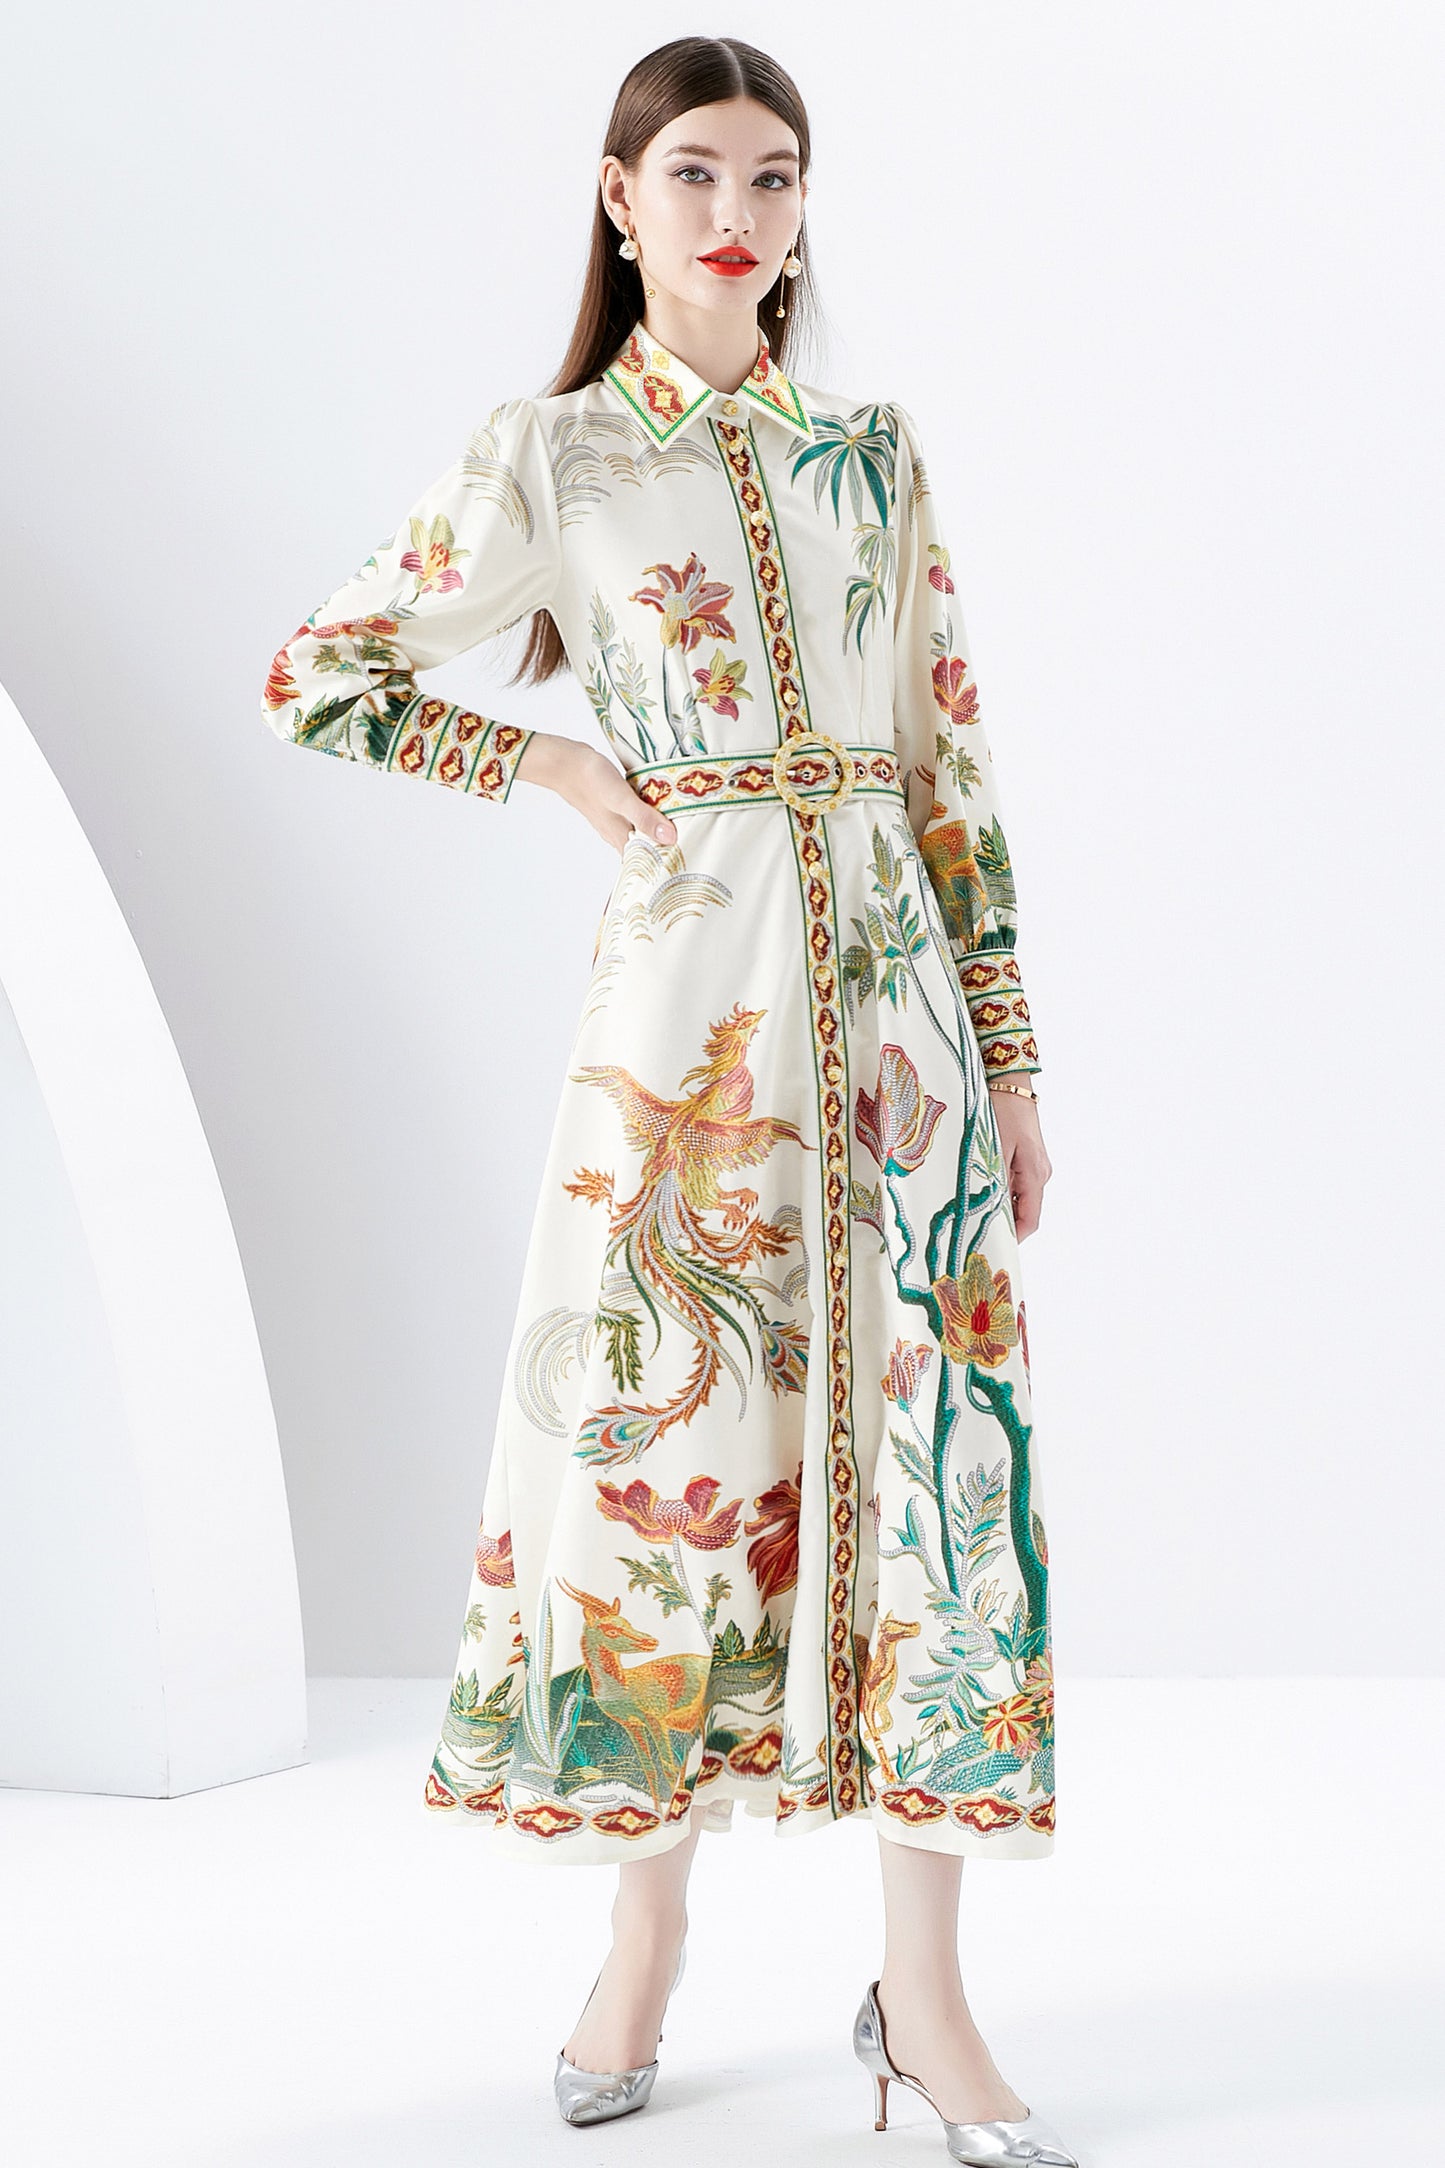 Women's Vintage Floral Print Casual A Line Flowy Maxi Party Dress